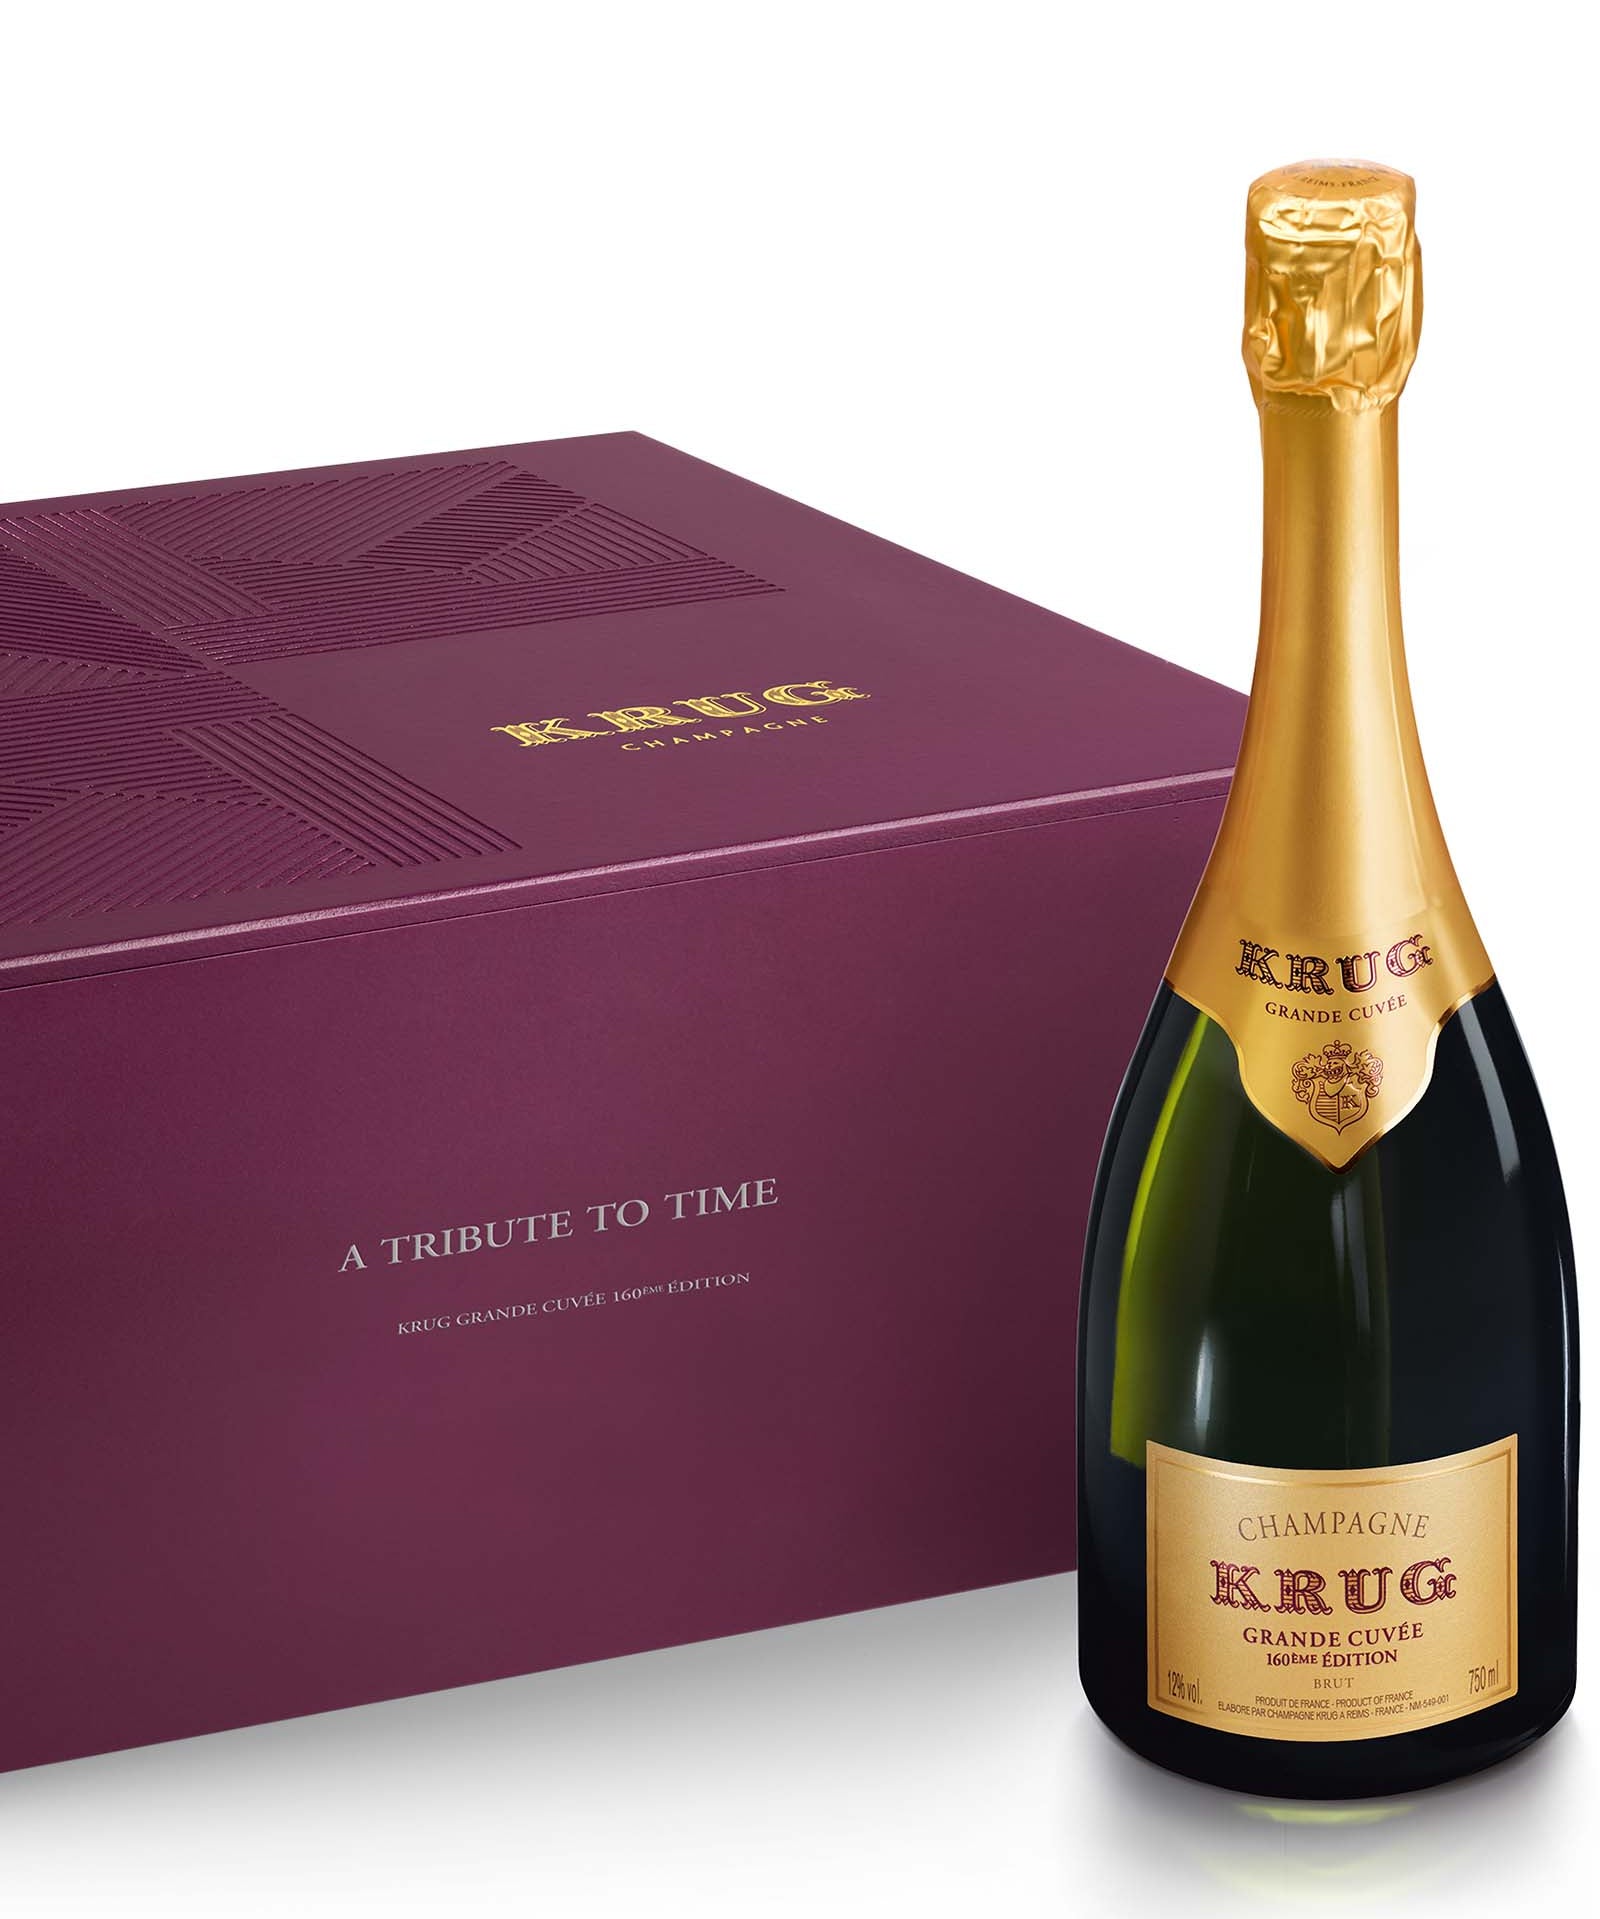 Krug Grande Cuvee 170th Edition - Premier Champagne